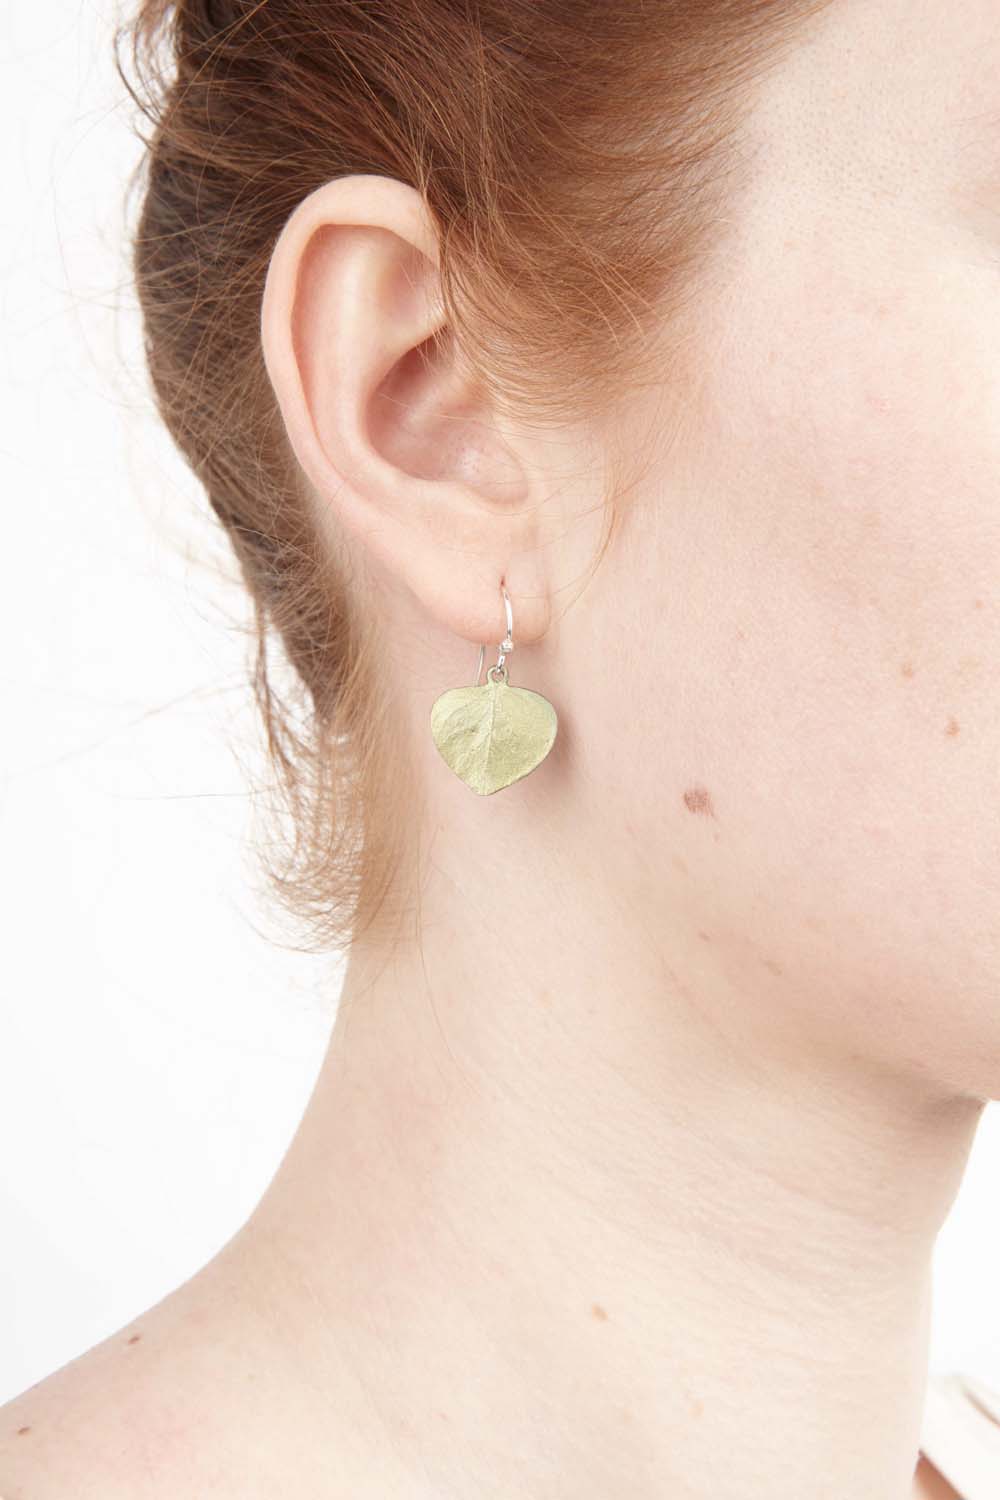 Eucalyptus Earrings - The Nancy Smillie Shop - Art, Jewellery & Designer Gifts Glasgow